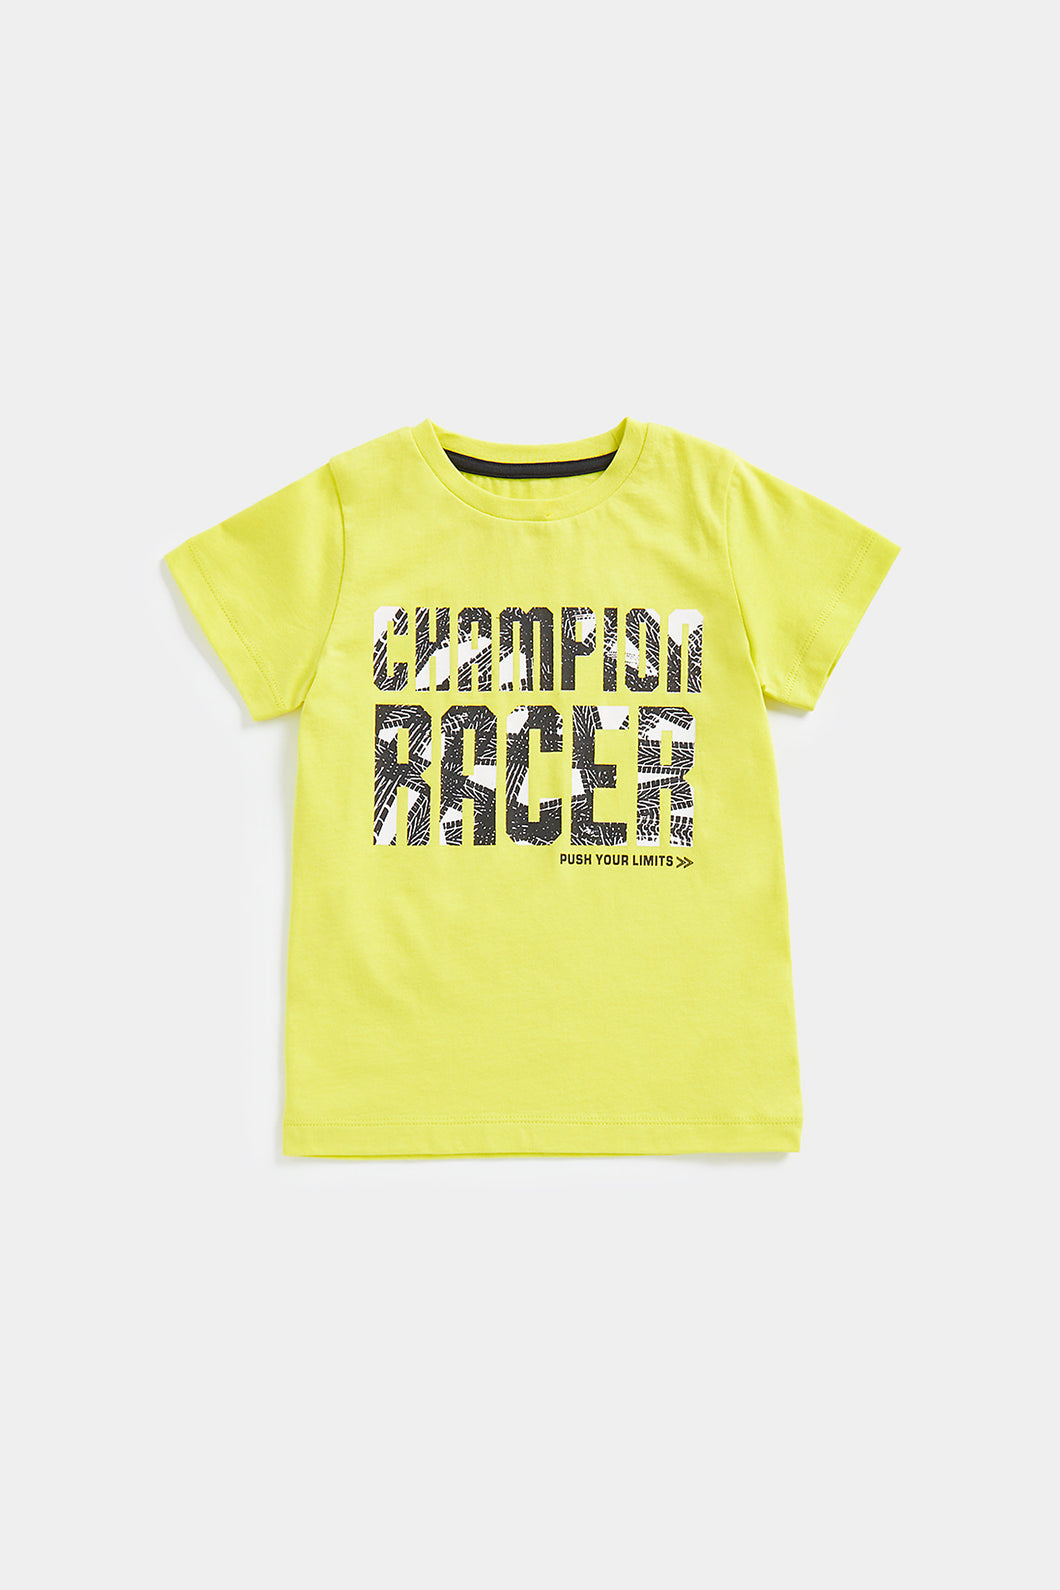 Mothercare Champion Racer T-Shirt